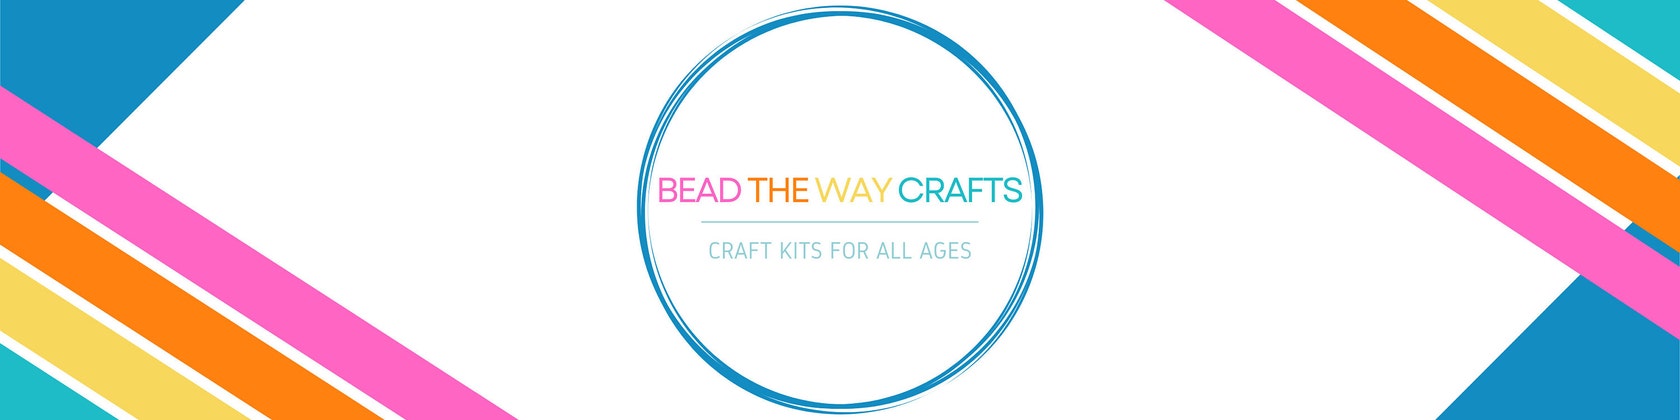 DIY Craft Kit for Kids, Keychain Making Kit, Name Keychain